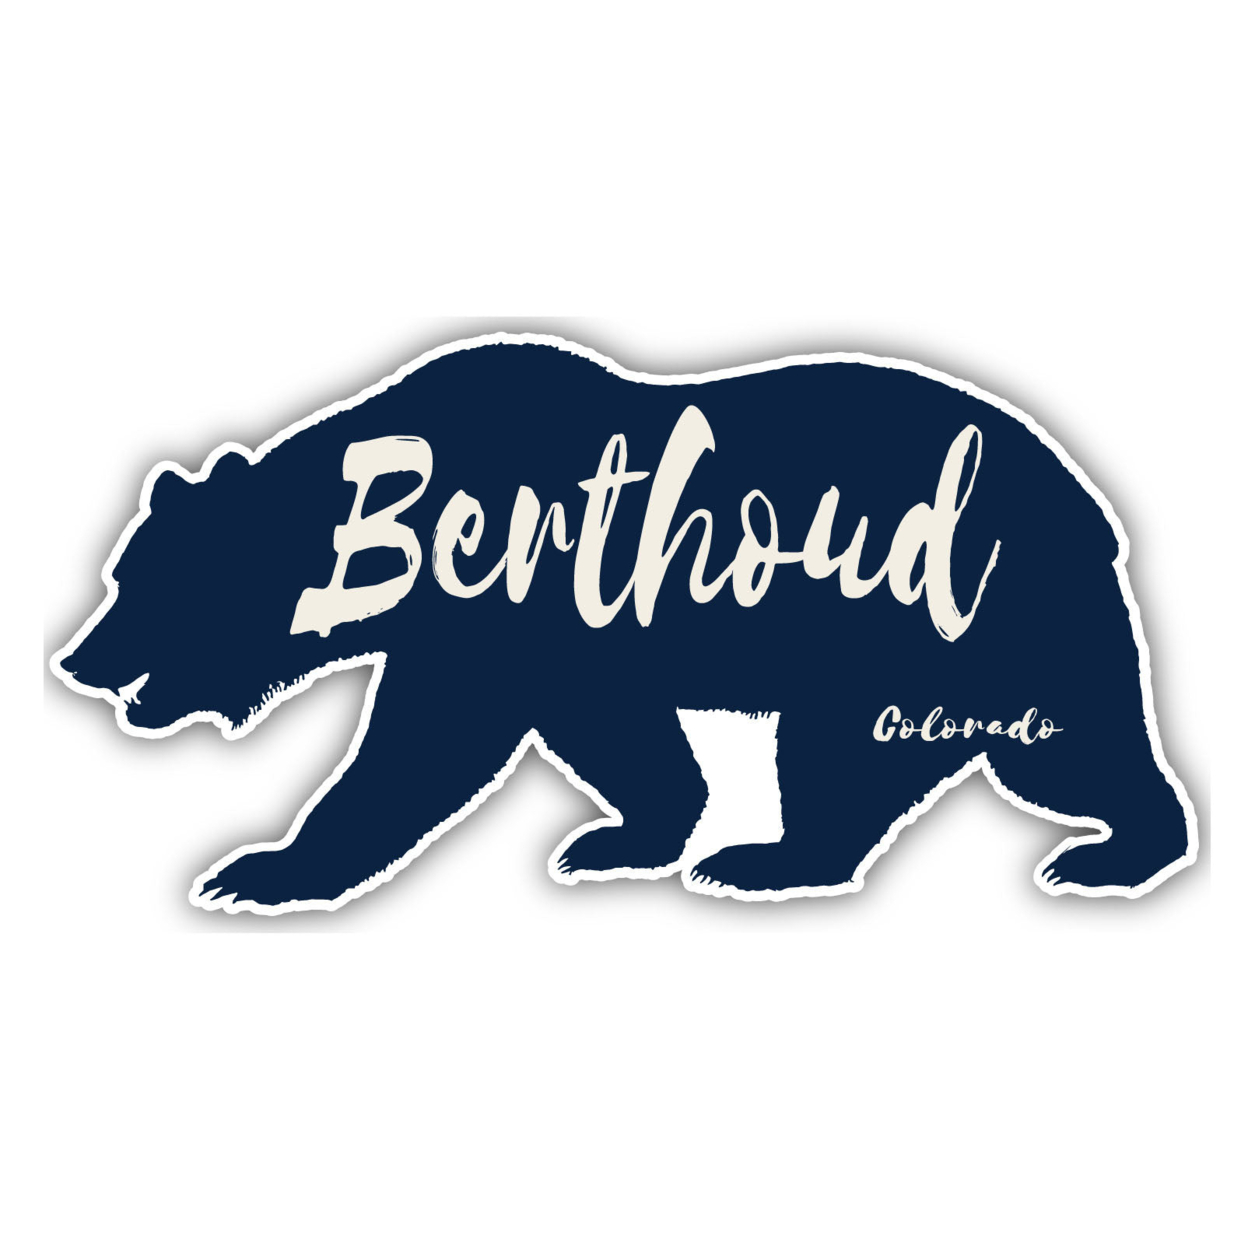 Berthoud Colorado Souvenir Decorative Stickers (Choose Theme And Size) - 4-Pack, 8-Inch, Tent